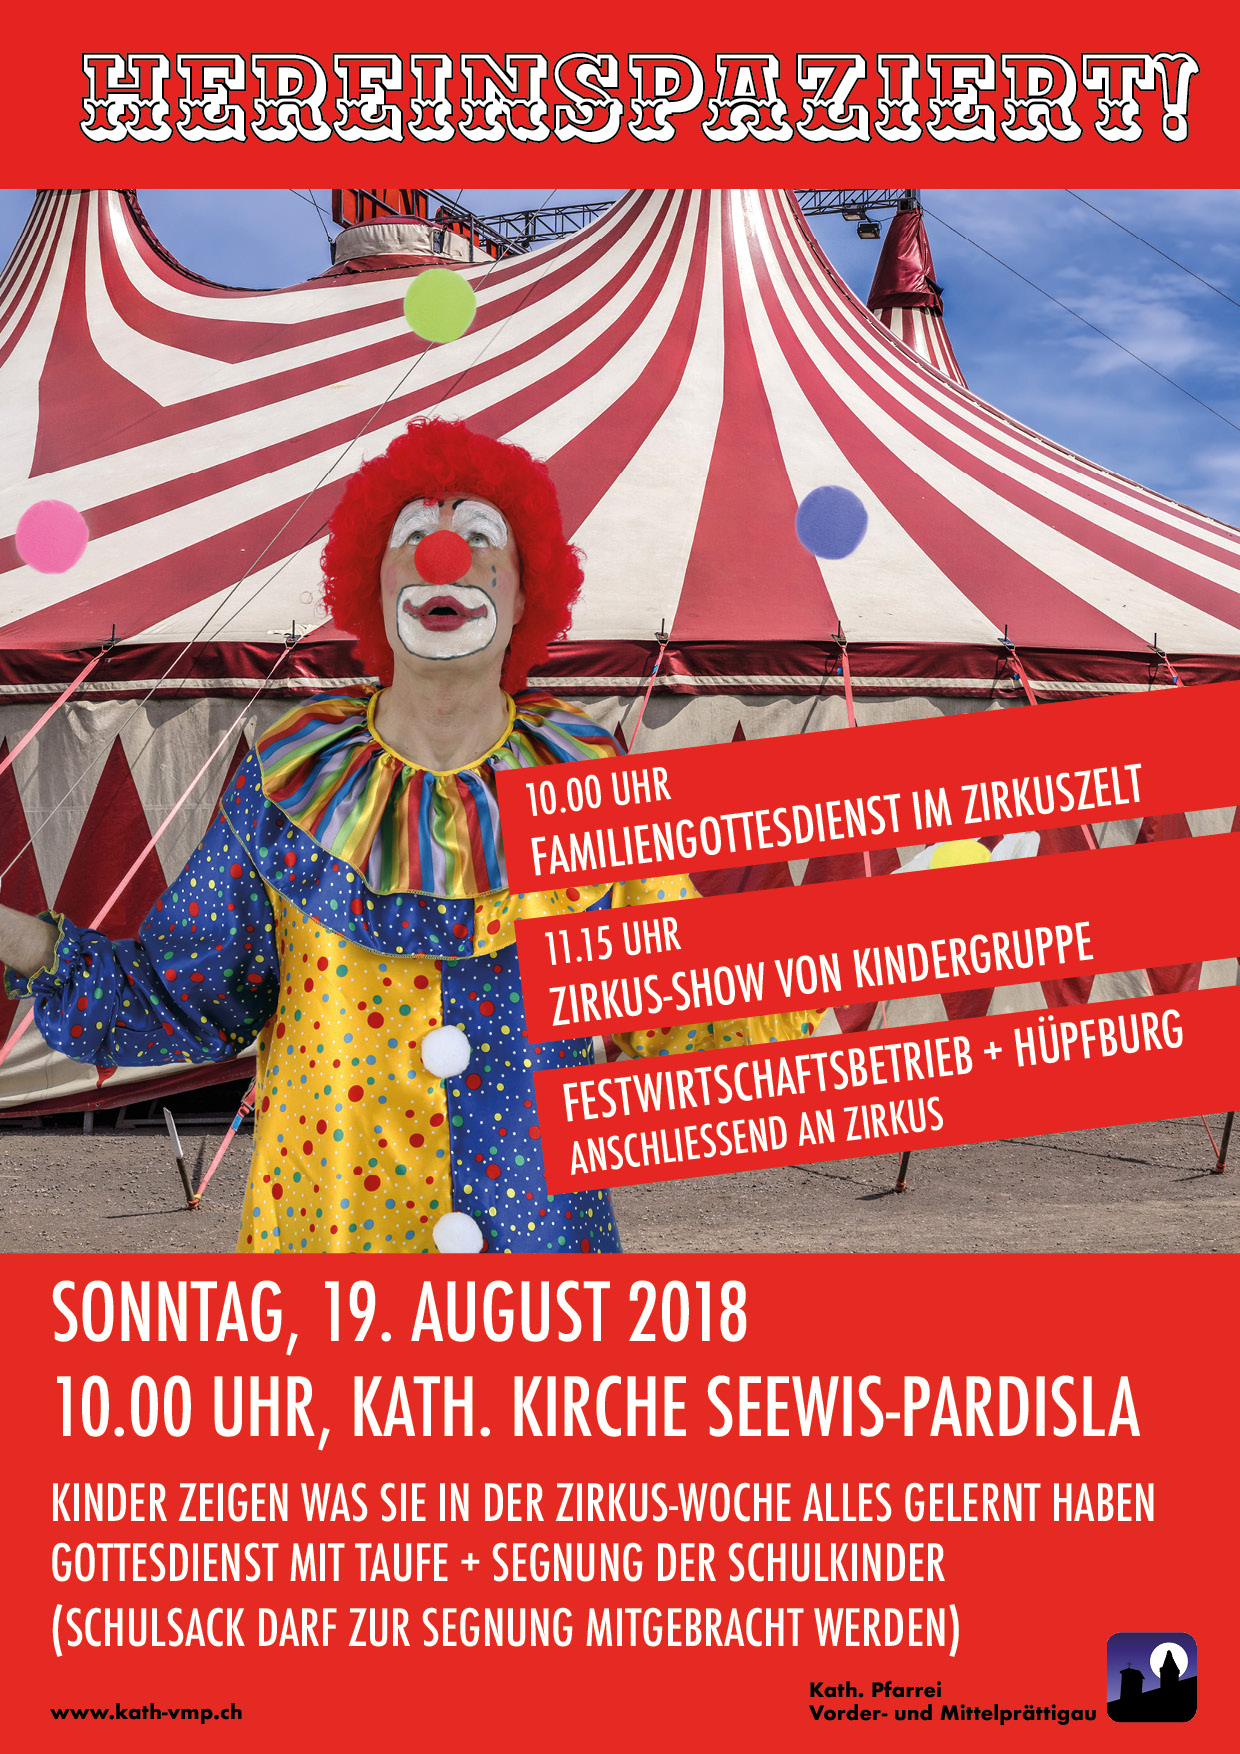 Zirkus am Sonntag, 19. August 2018